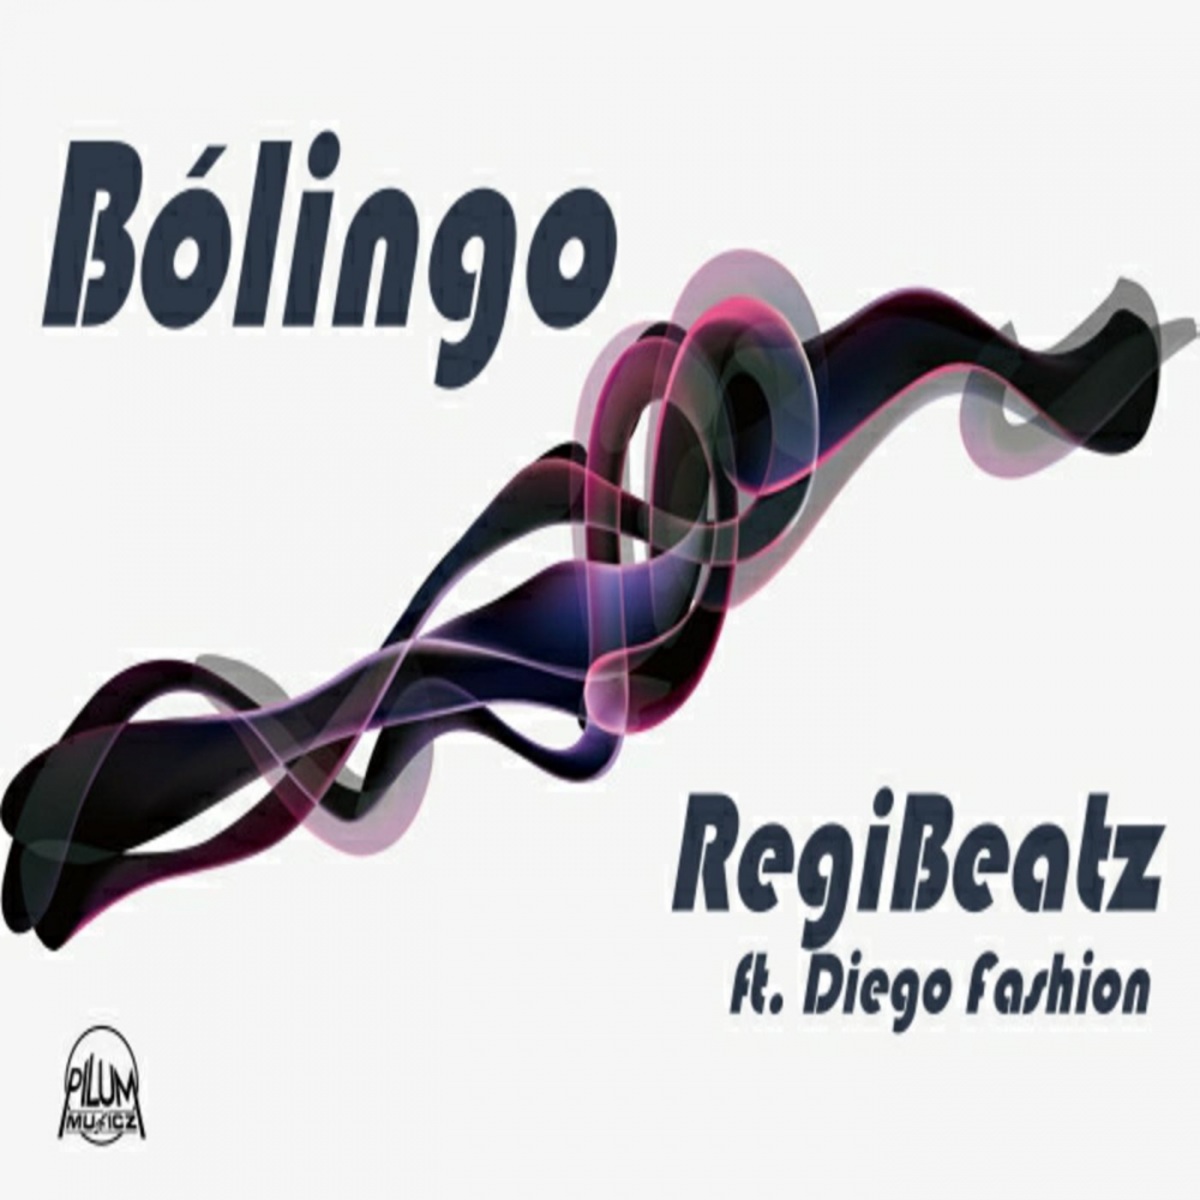 RegiBeatz - Bólingo / Pilum Musicz